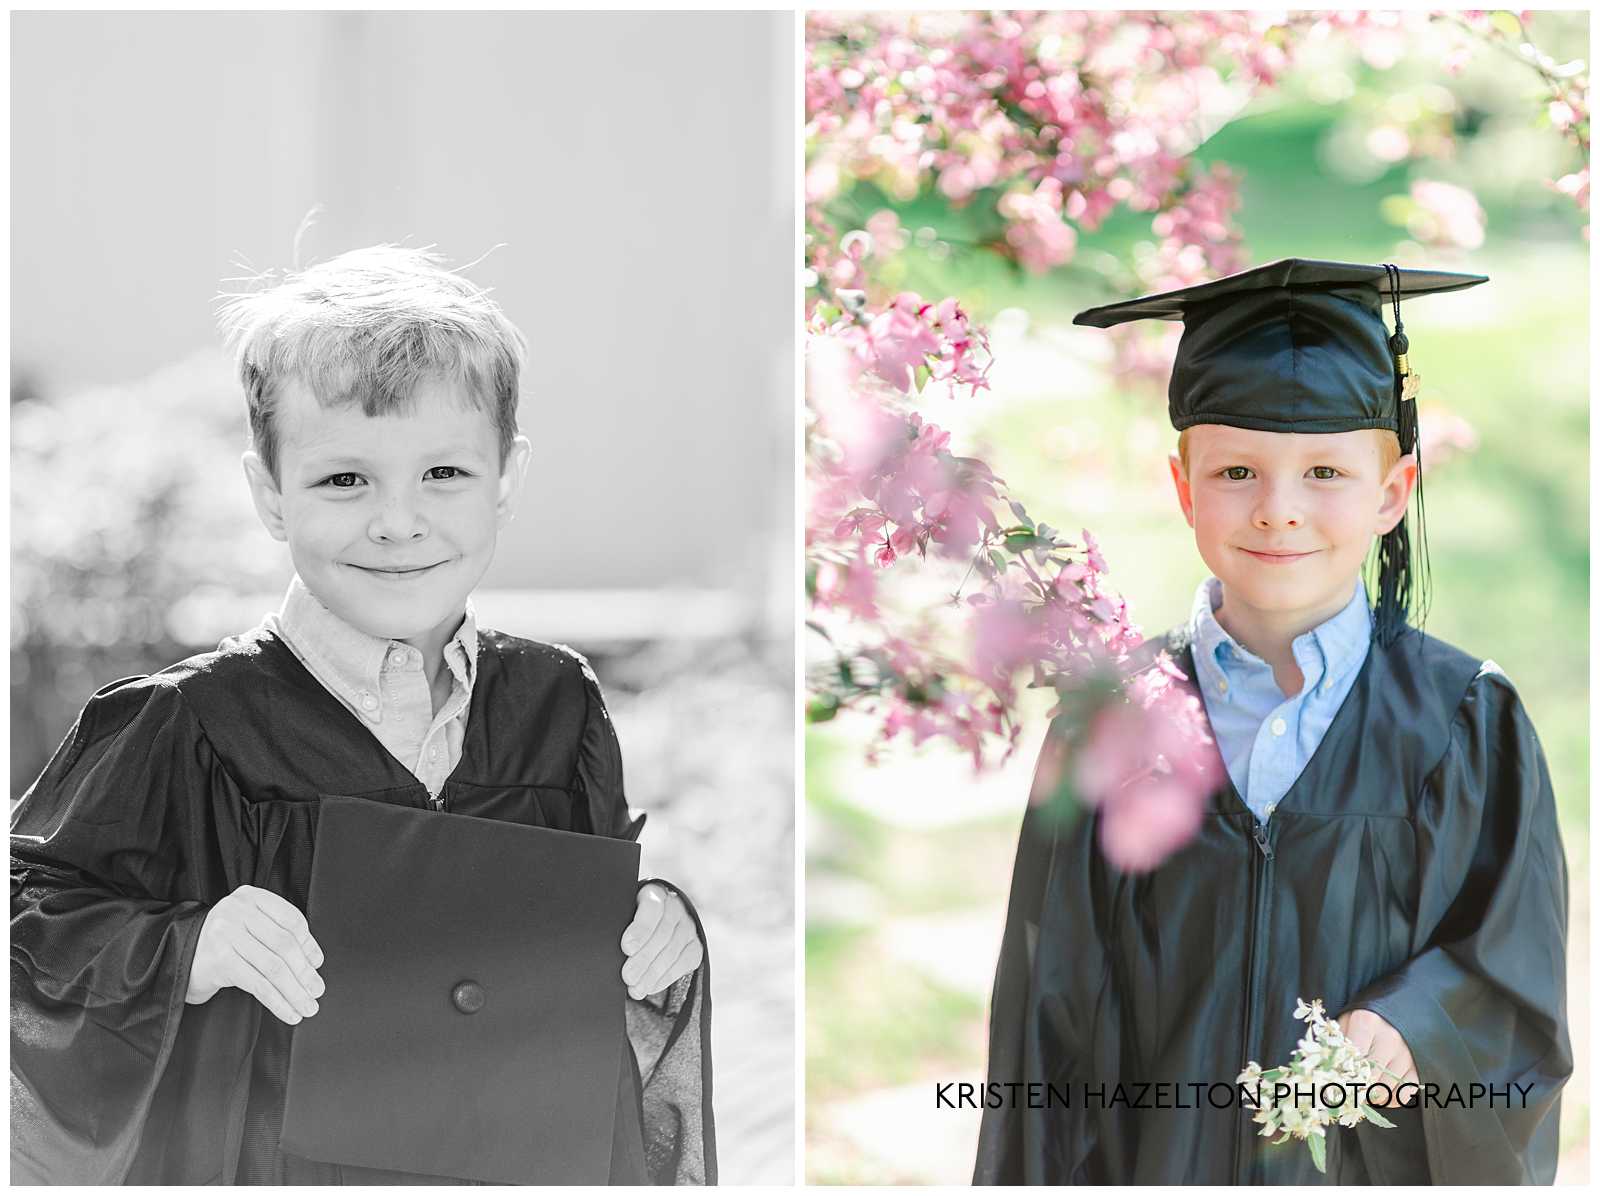 Kindergarten senior portraits by Chicago photographer Kristen Hazelton